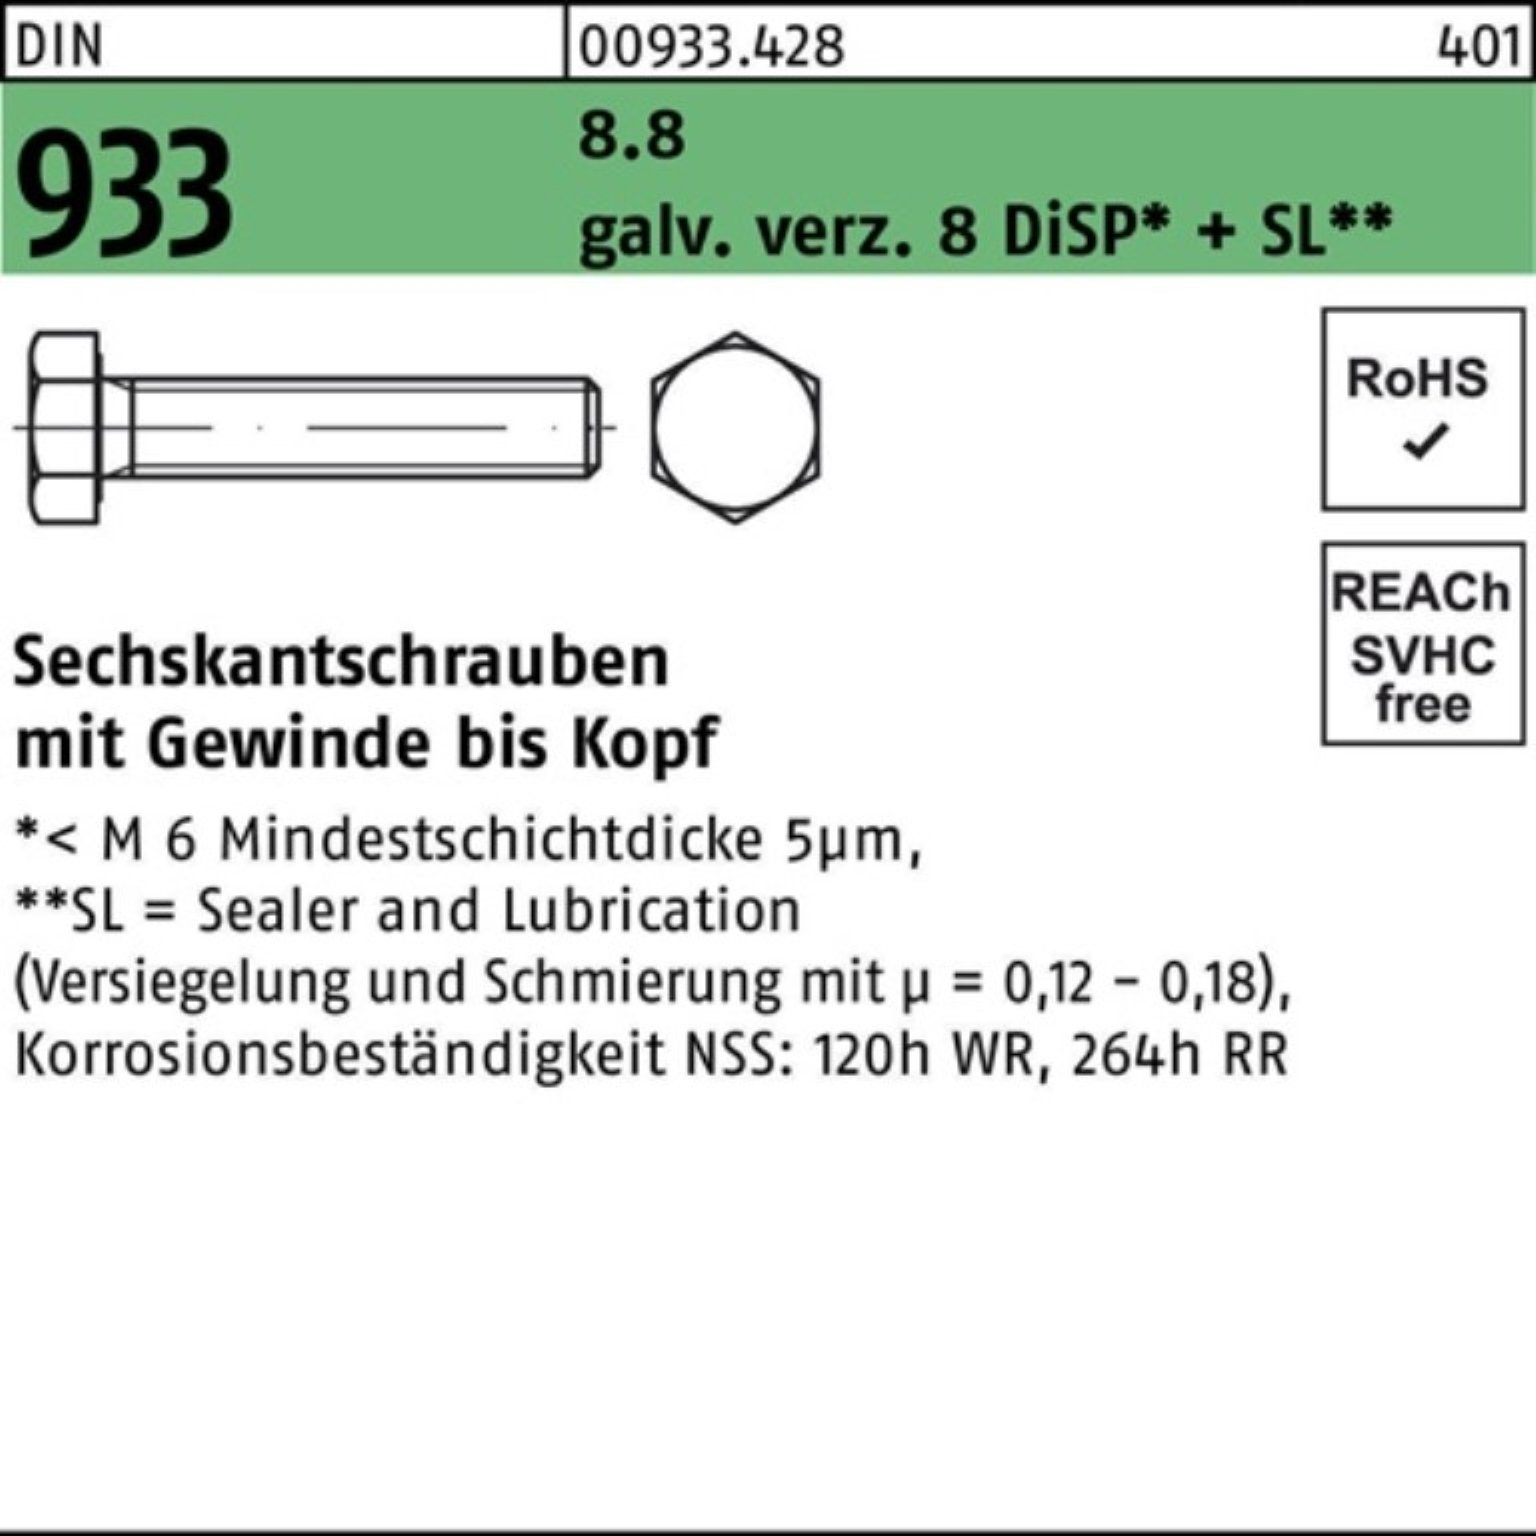 Reyher 8.8 55 200er VG gal Zn Pack DIN Sechskantschraube 933 M8x + SL 8 DiSP Sechskantschraube